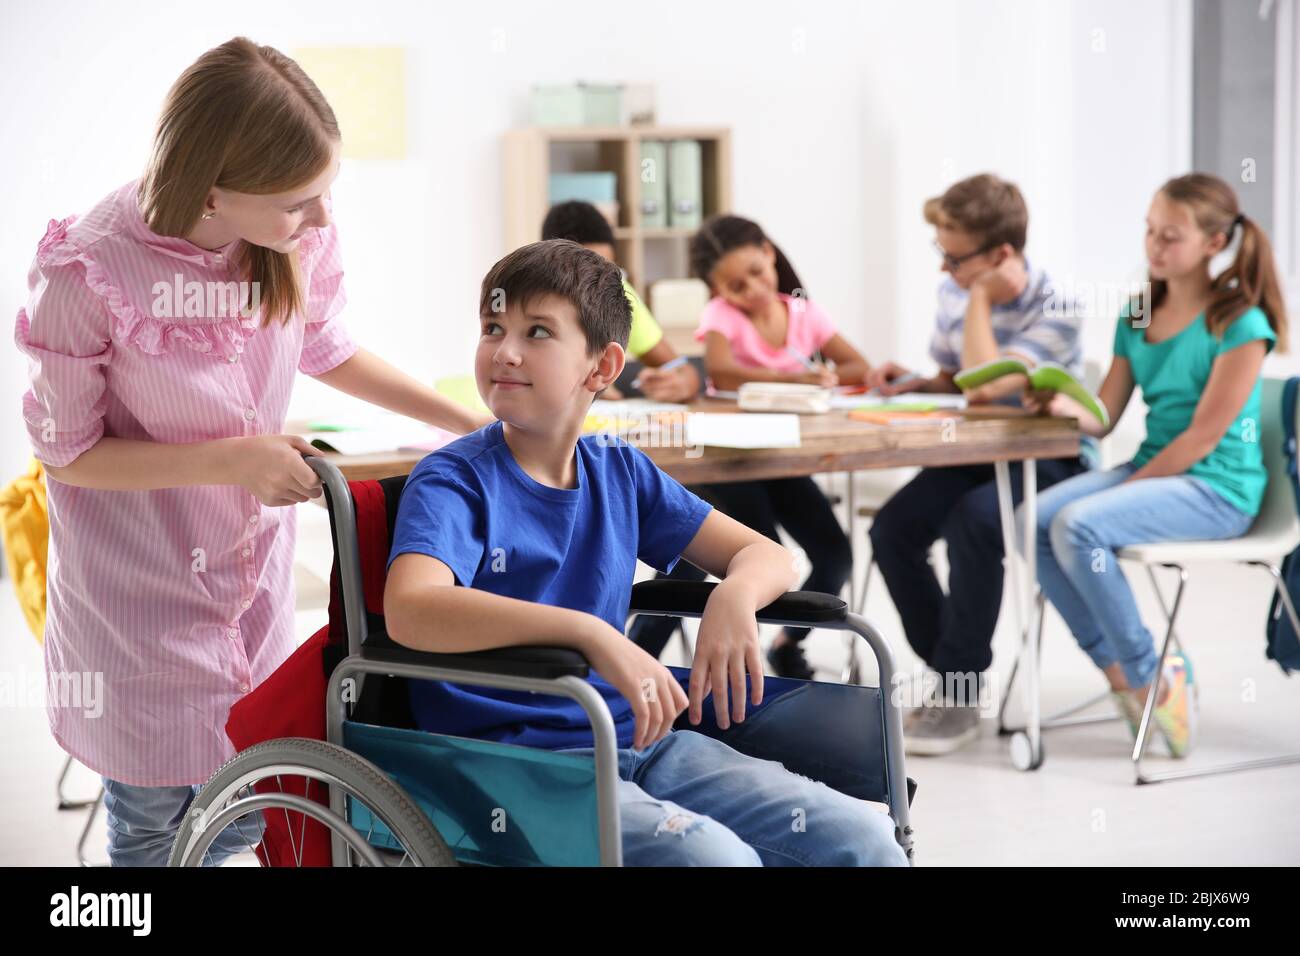 Girl helping boy in wheelchair at school Stock Photo